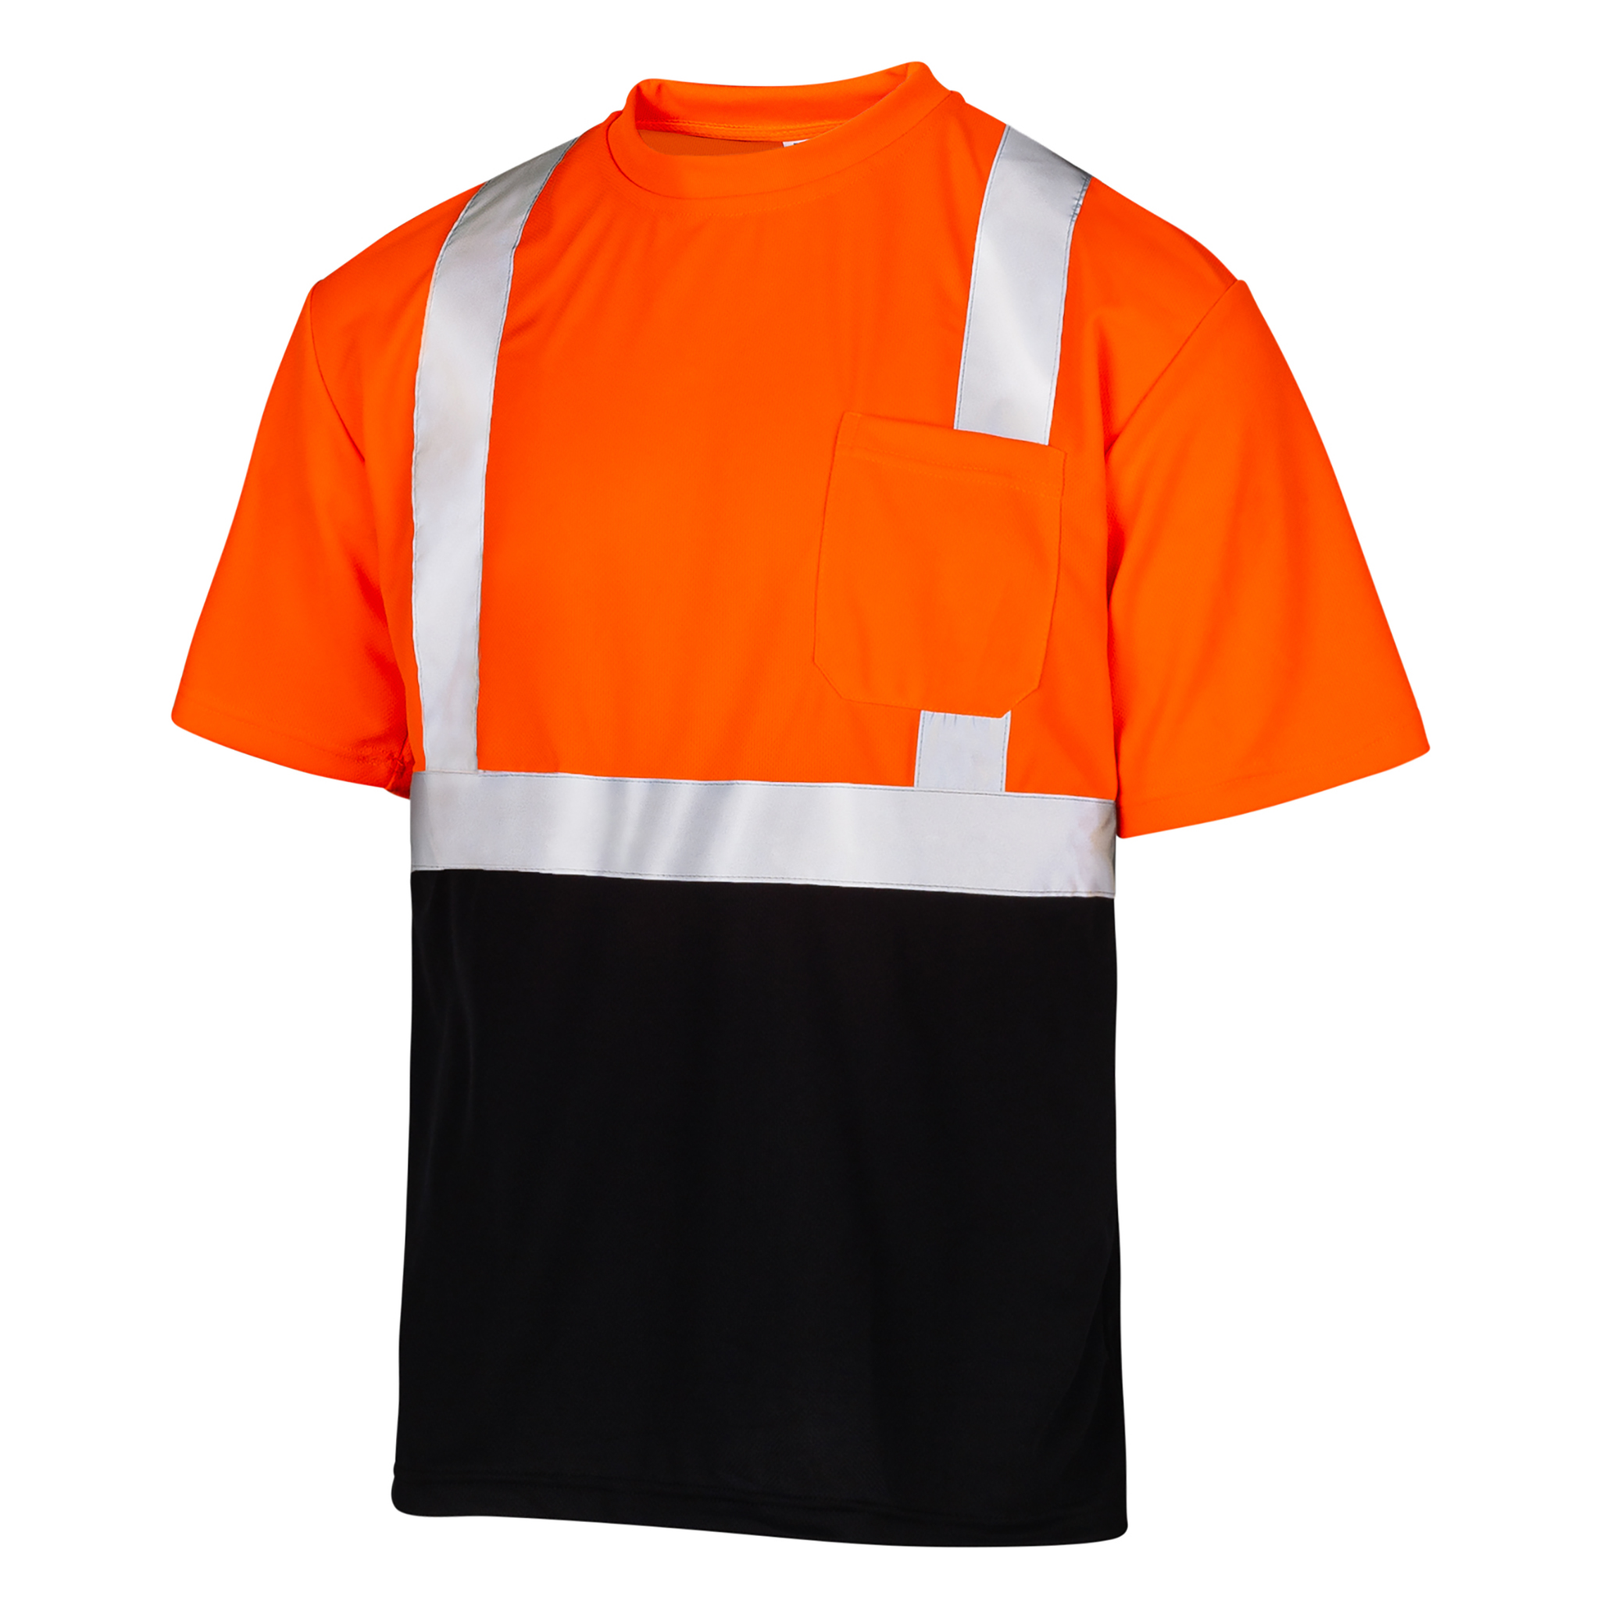 Terra Hi-Vis Breathable Work T-Shirt with Reflective Tape, Chest Pocket,  Orange